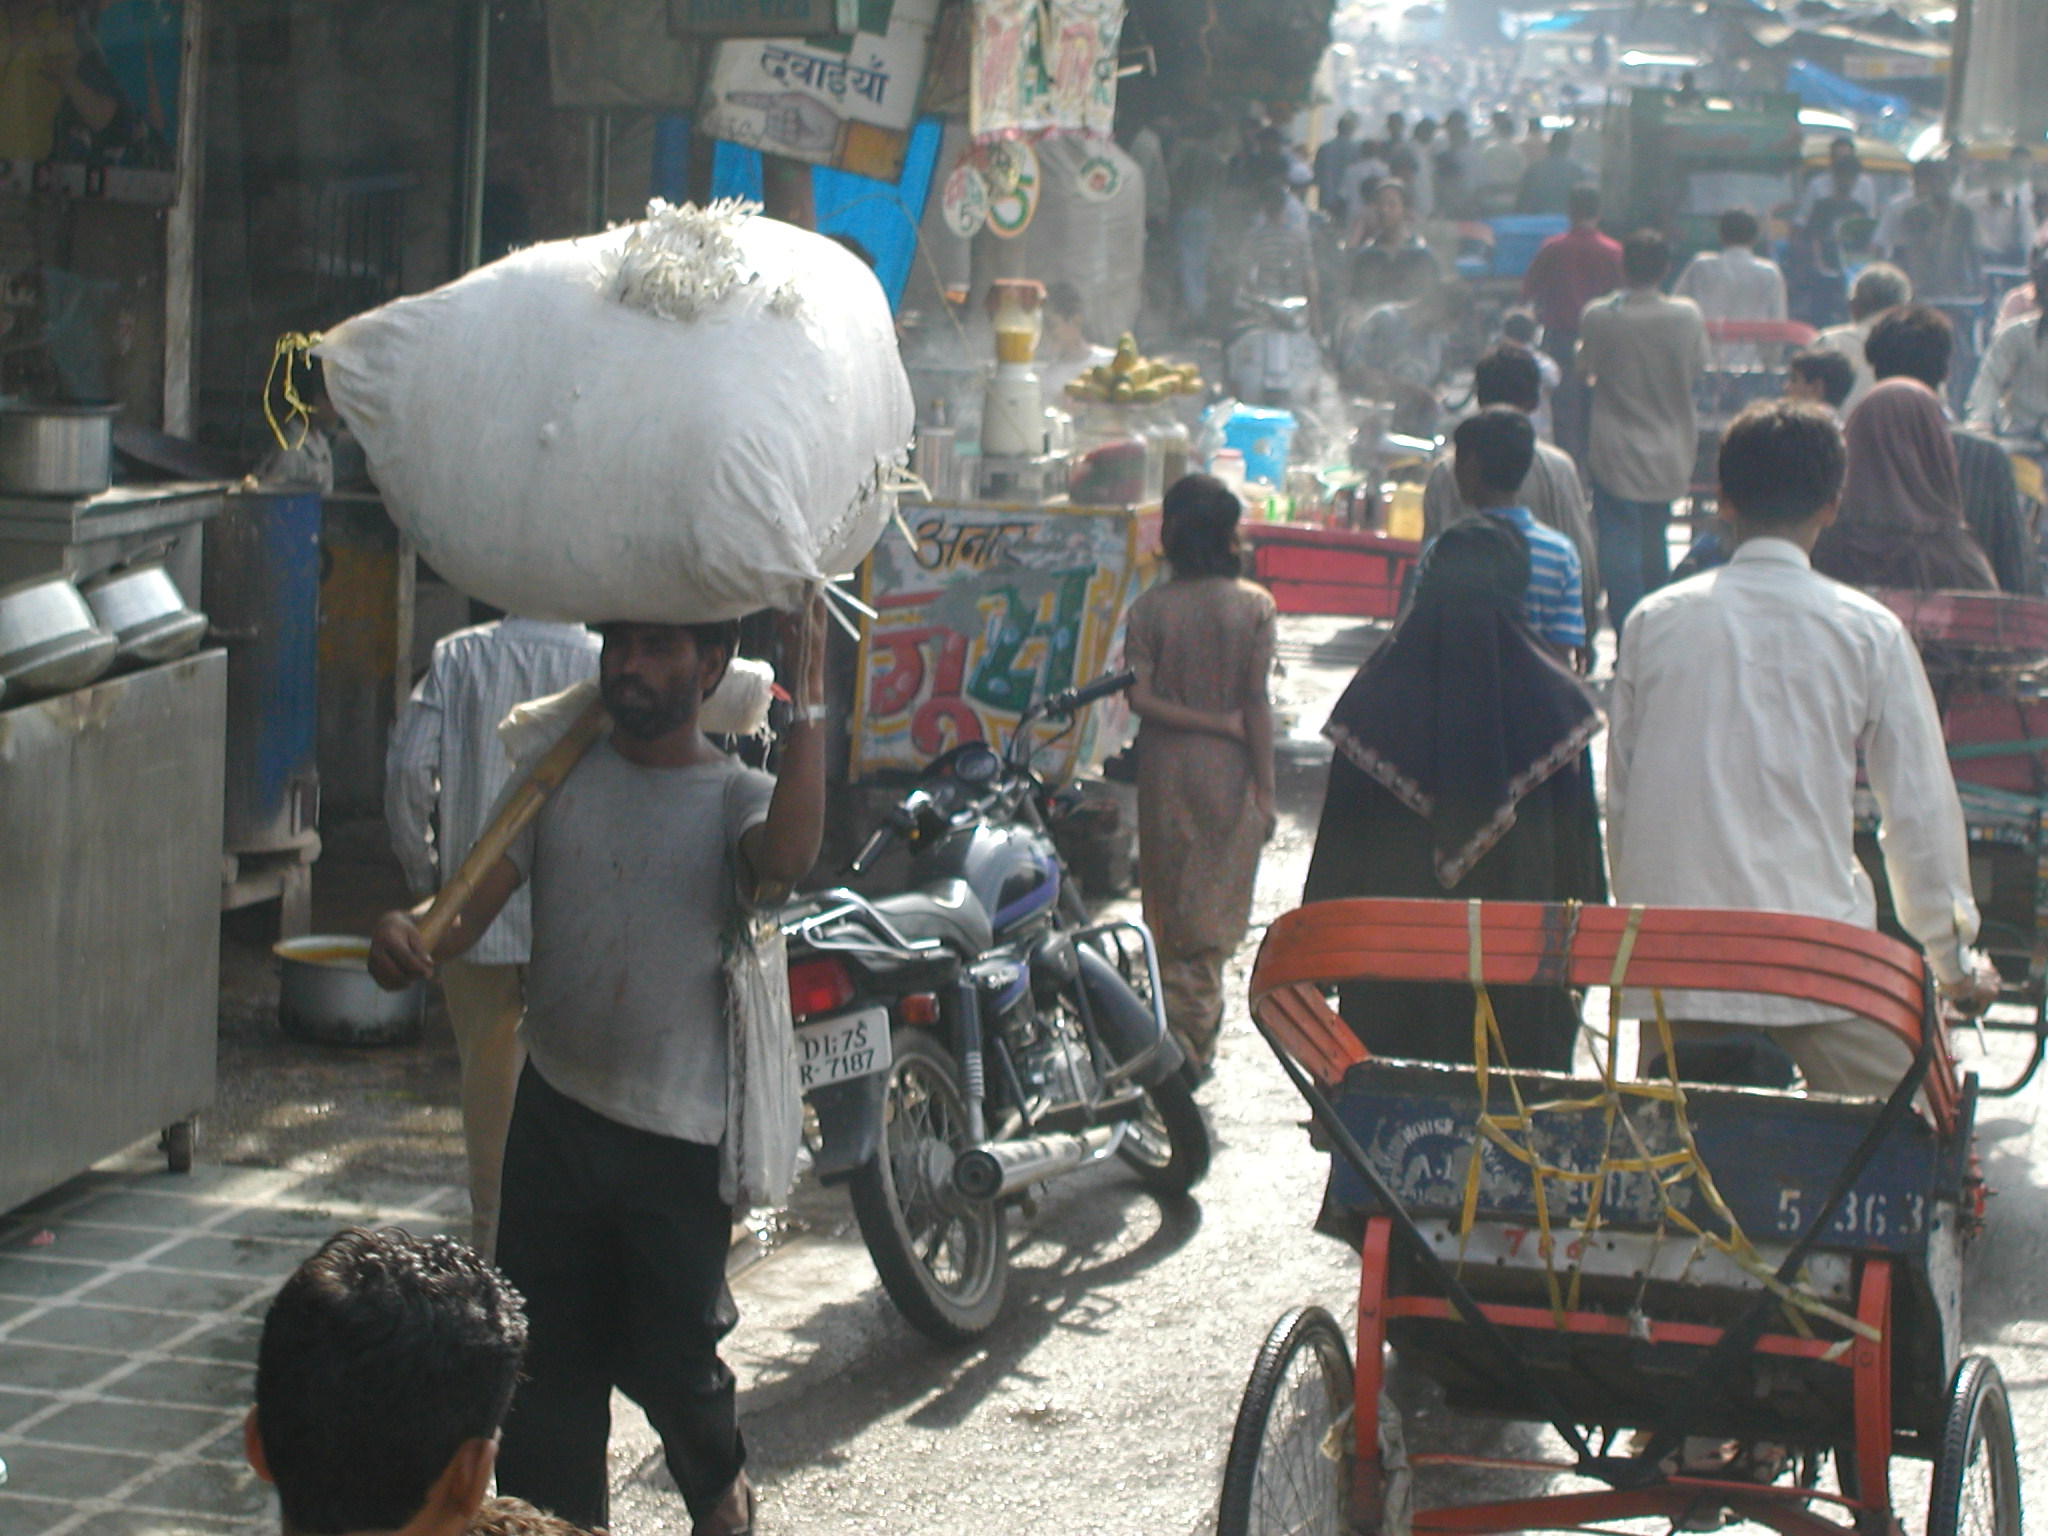 Carts, pedestrians, goods, and shops line the street of Delhi